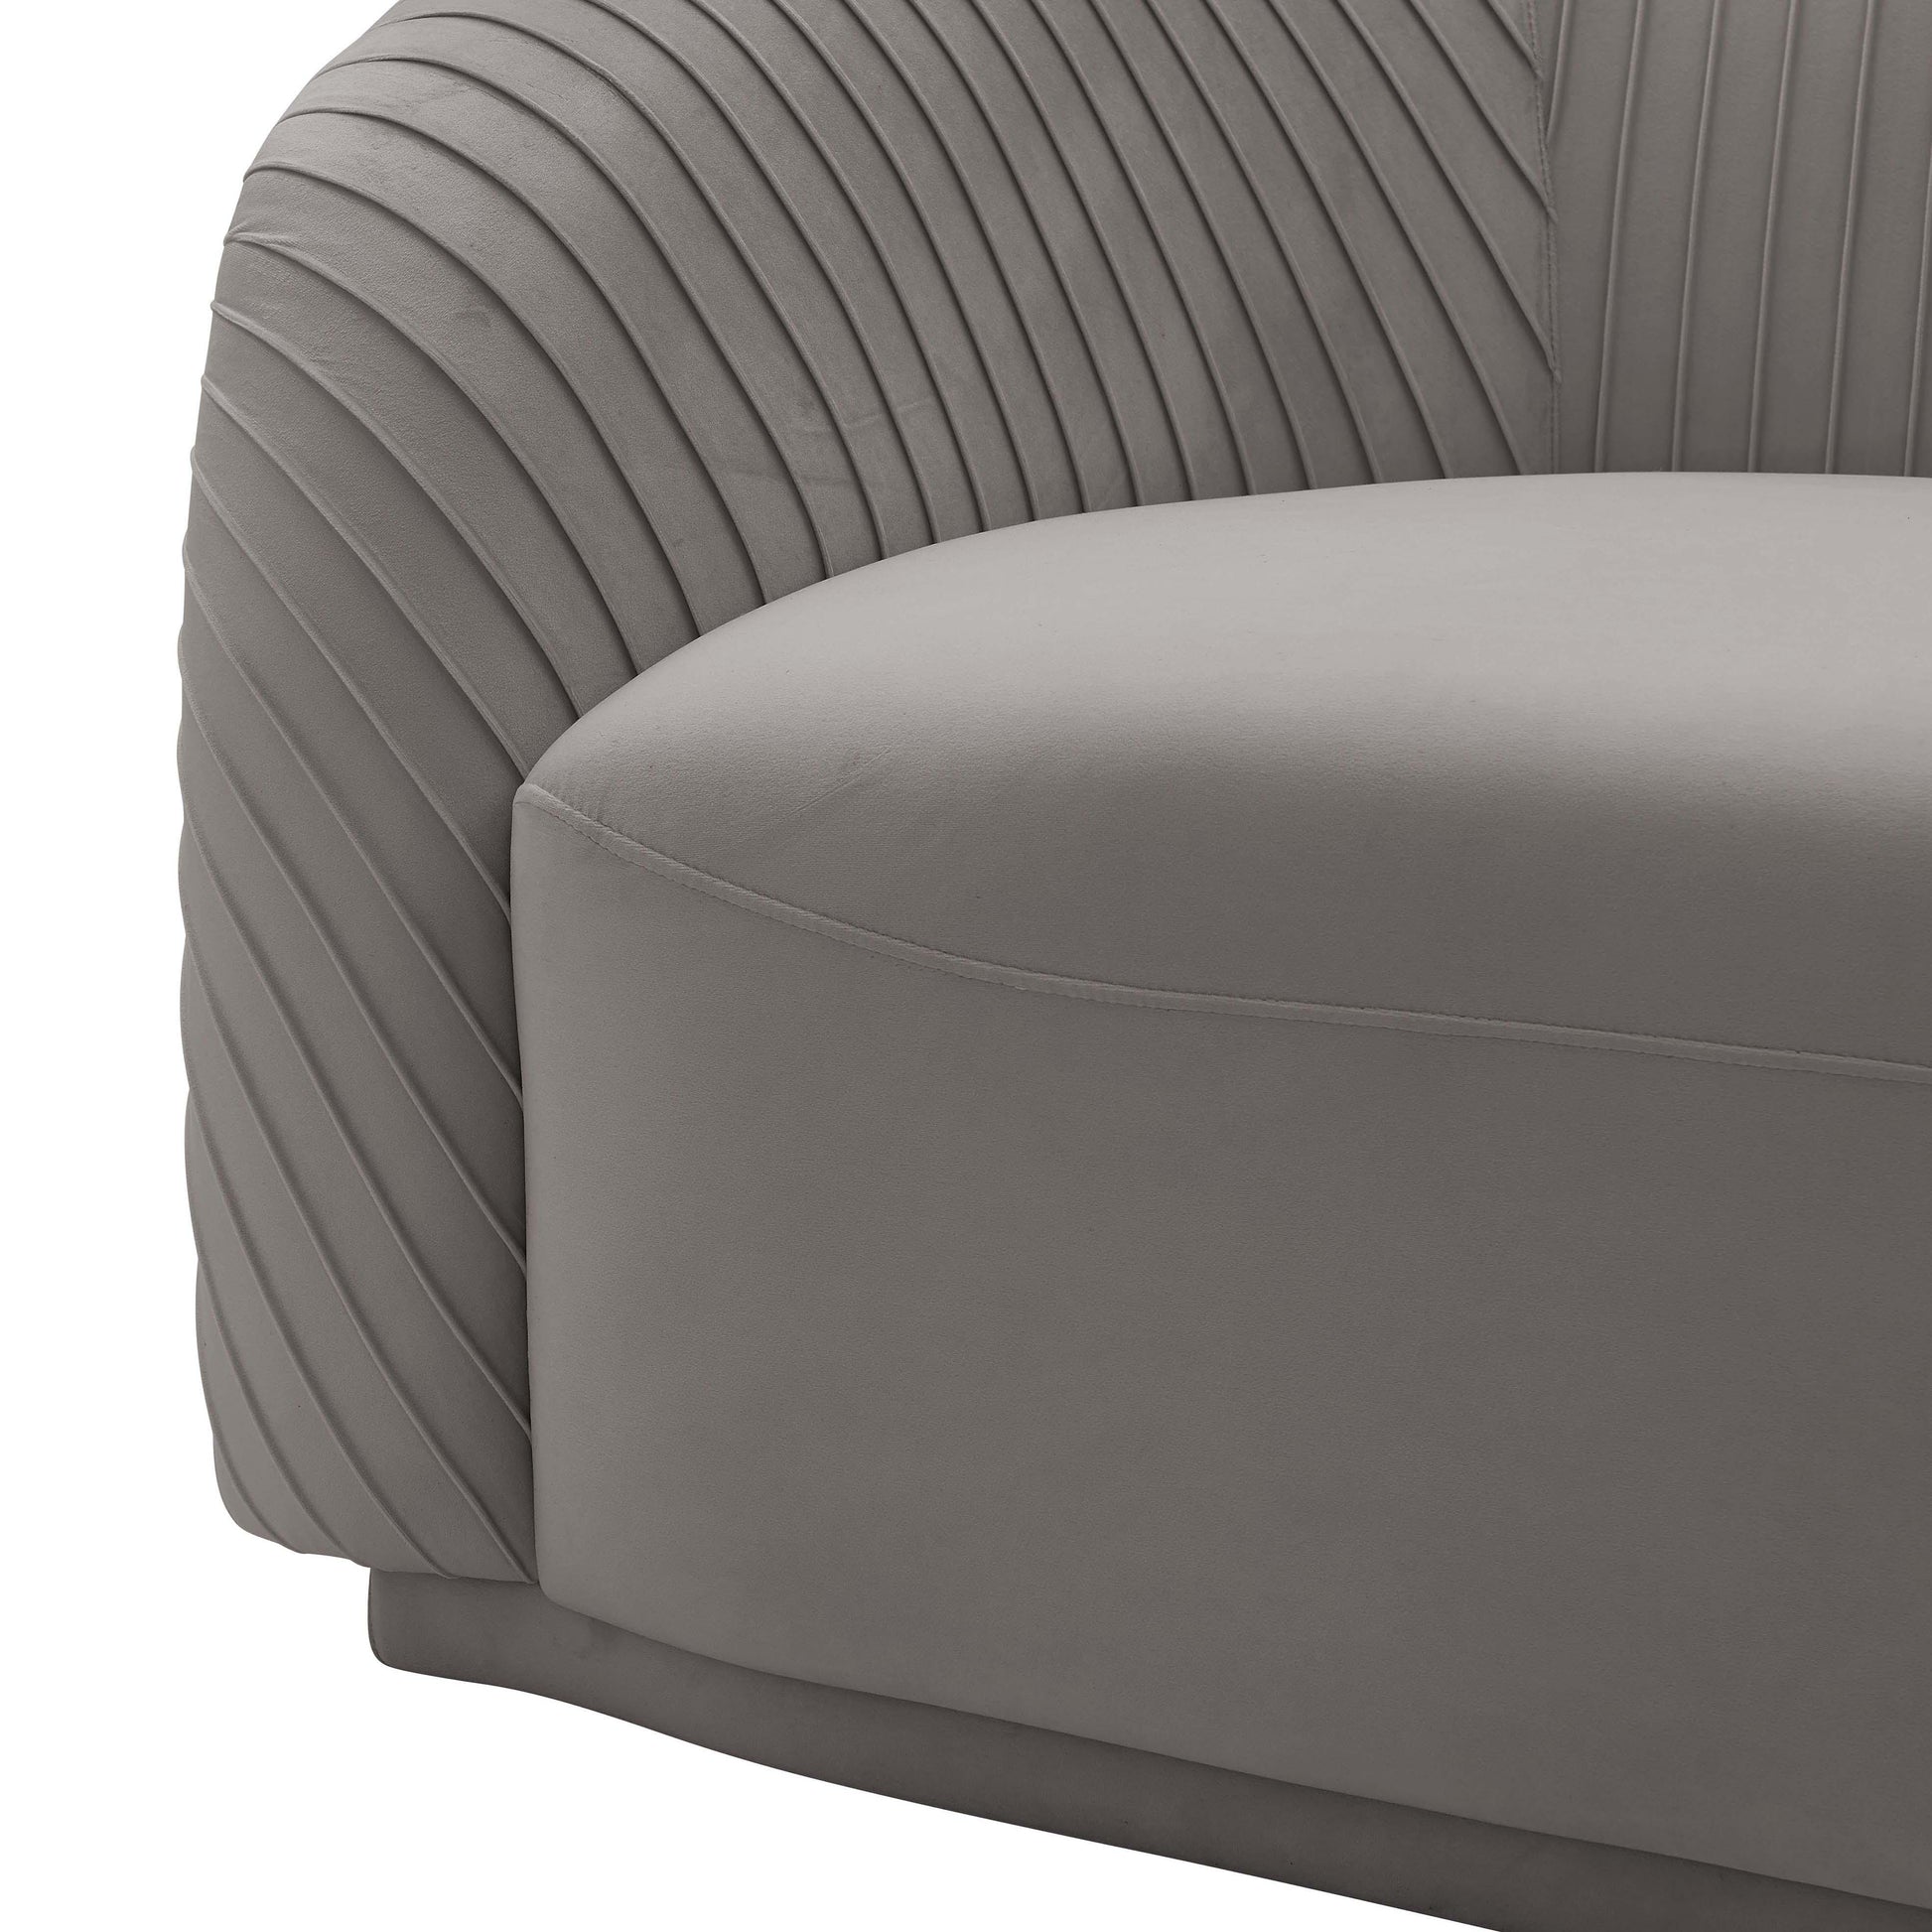 Velvet Inspire Furniture Yara Decor – TOV Pleated Home Sofa by Me!